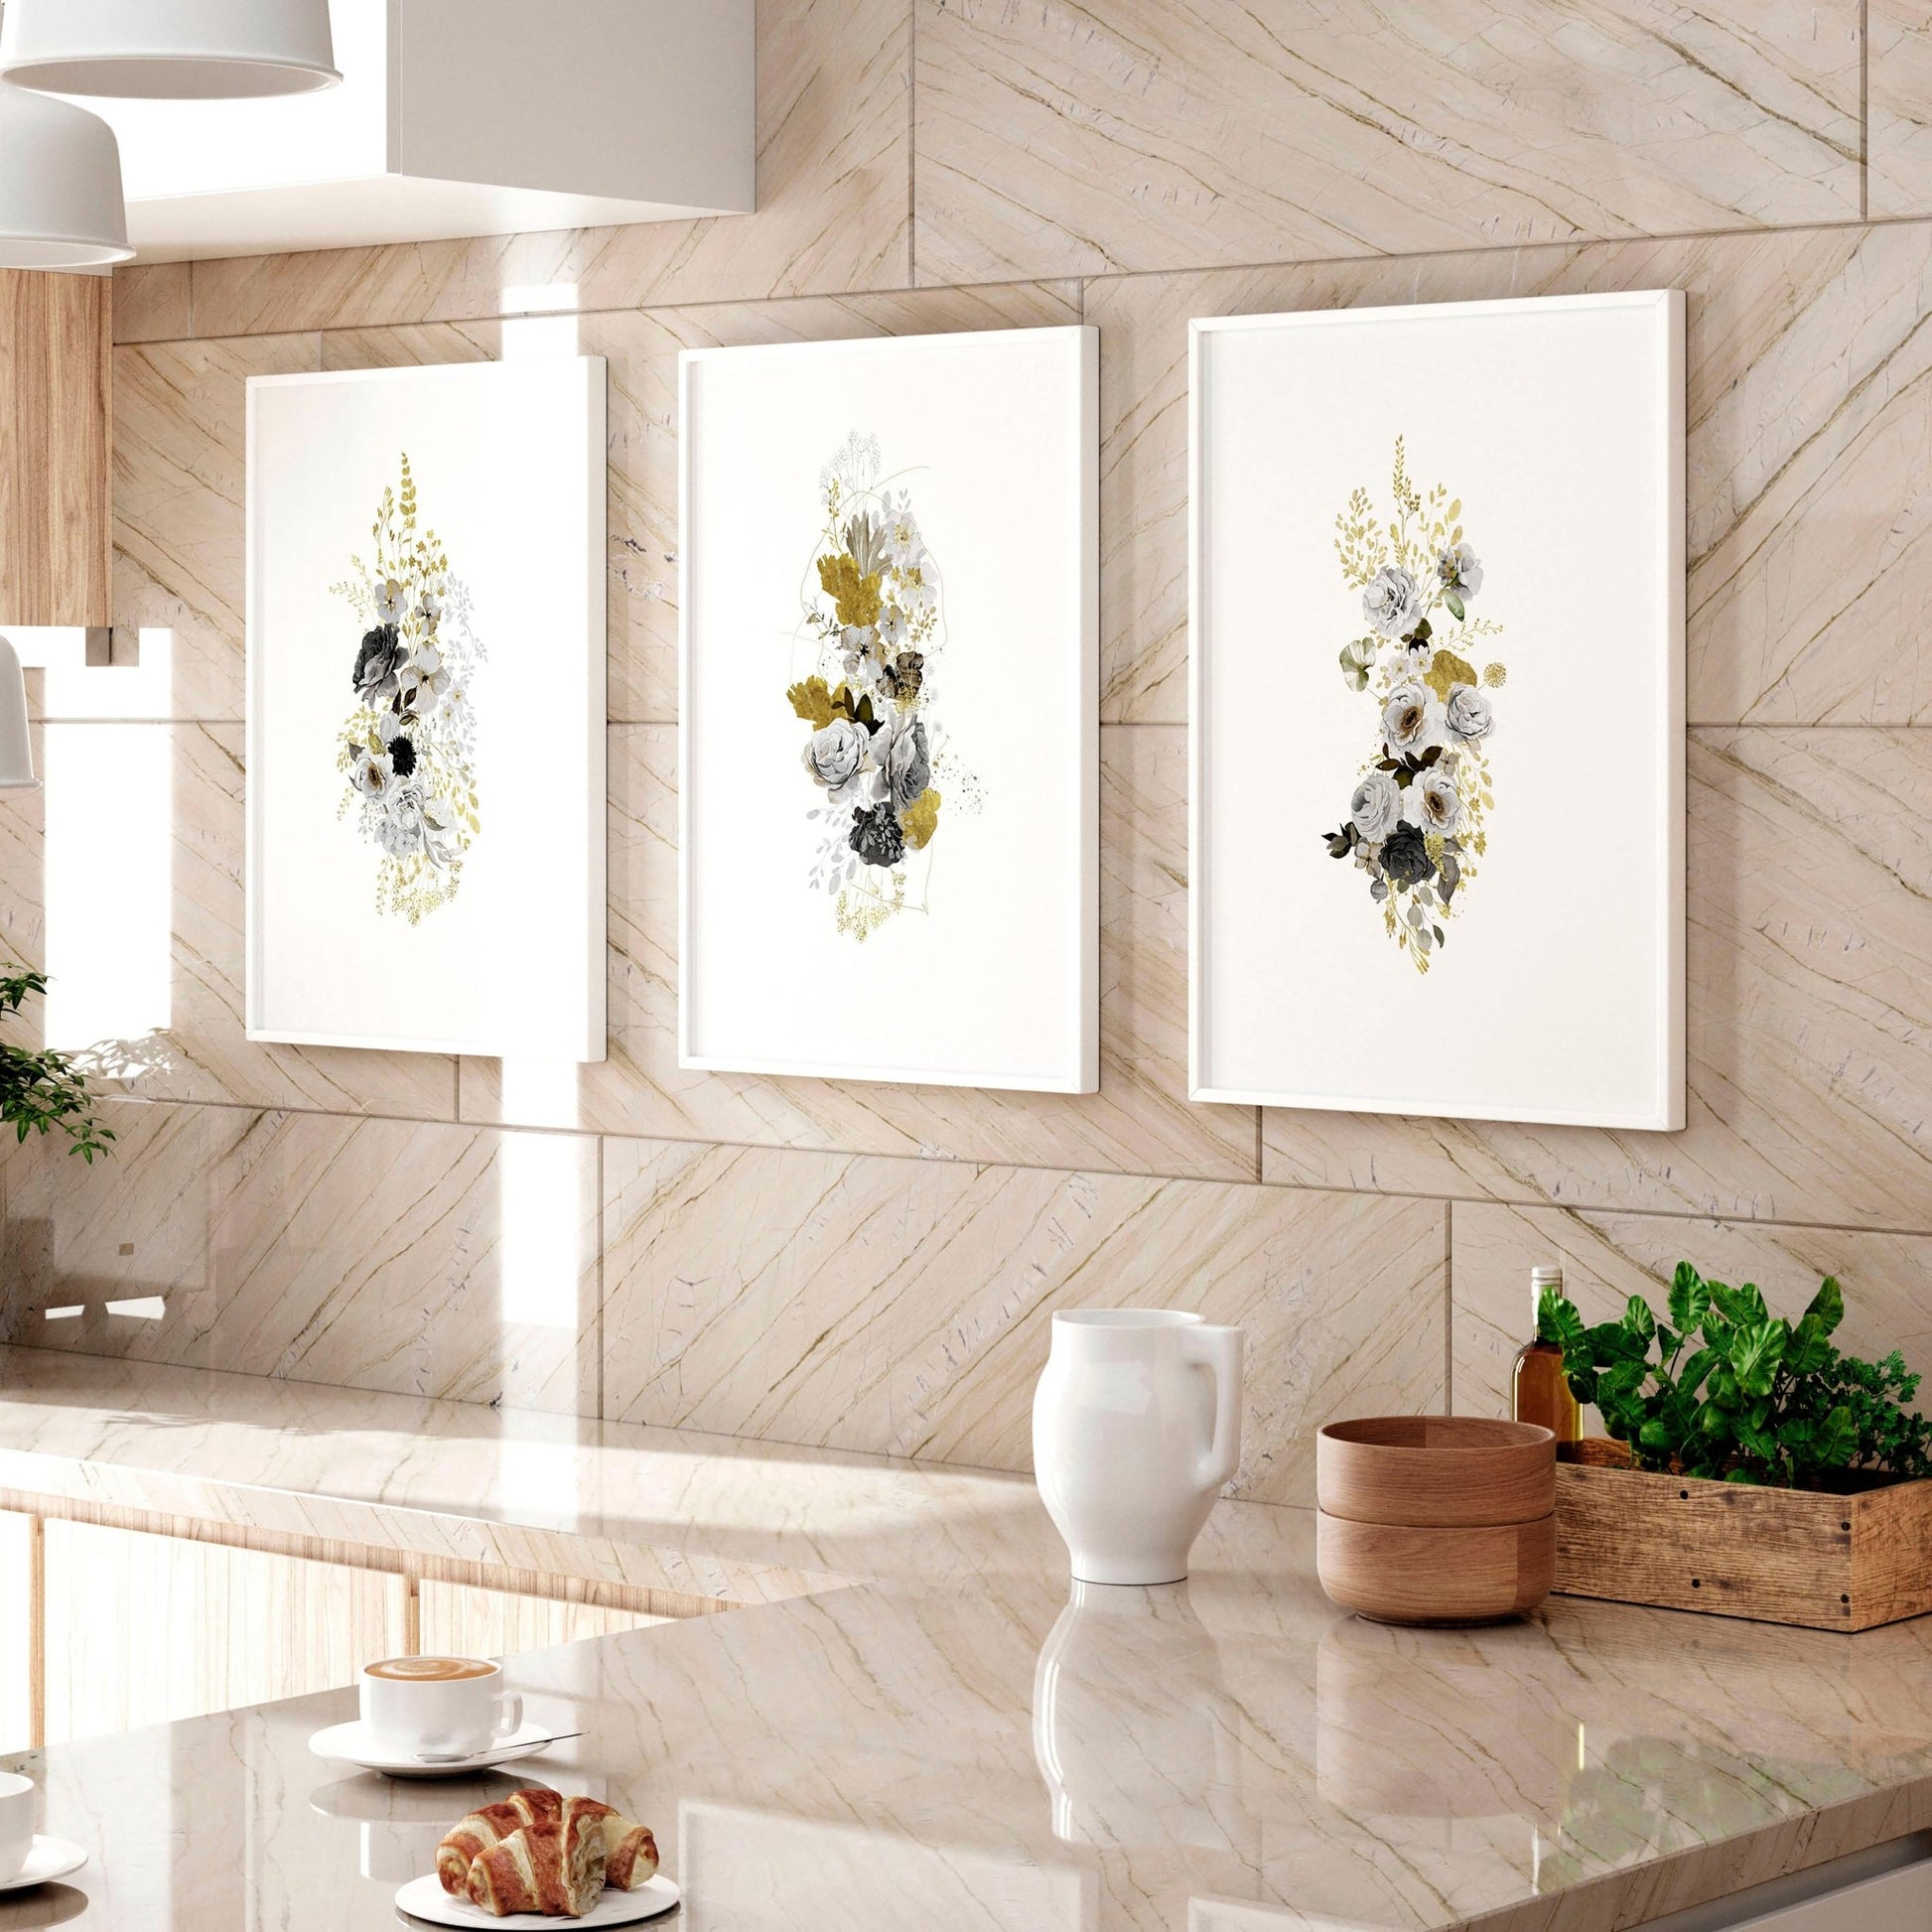 Artwork for kitchen walls | set of 3 wall art